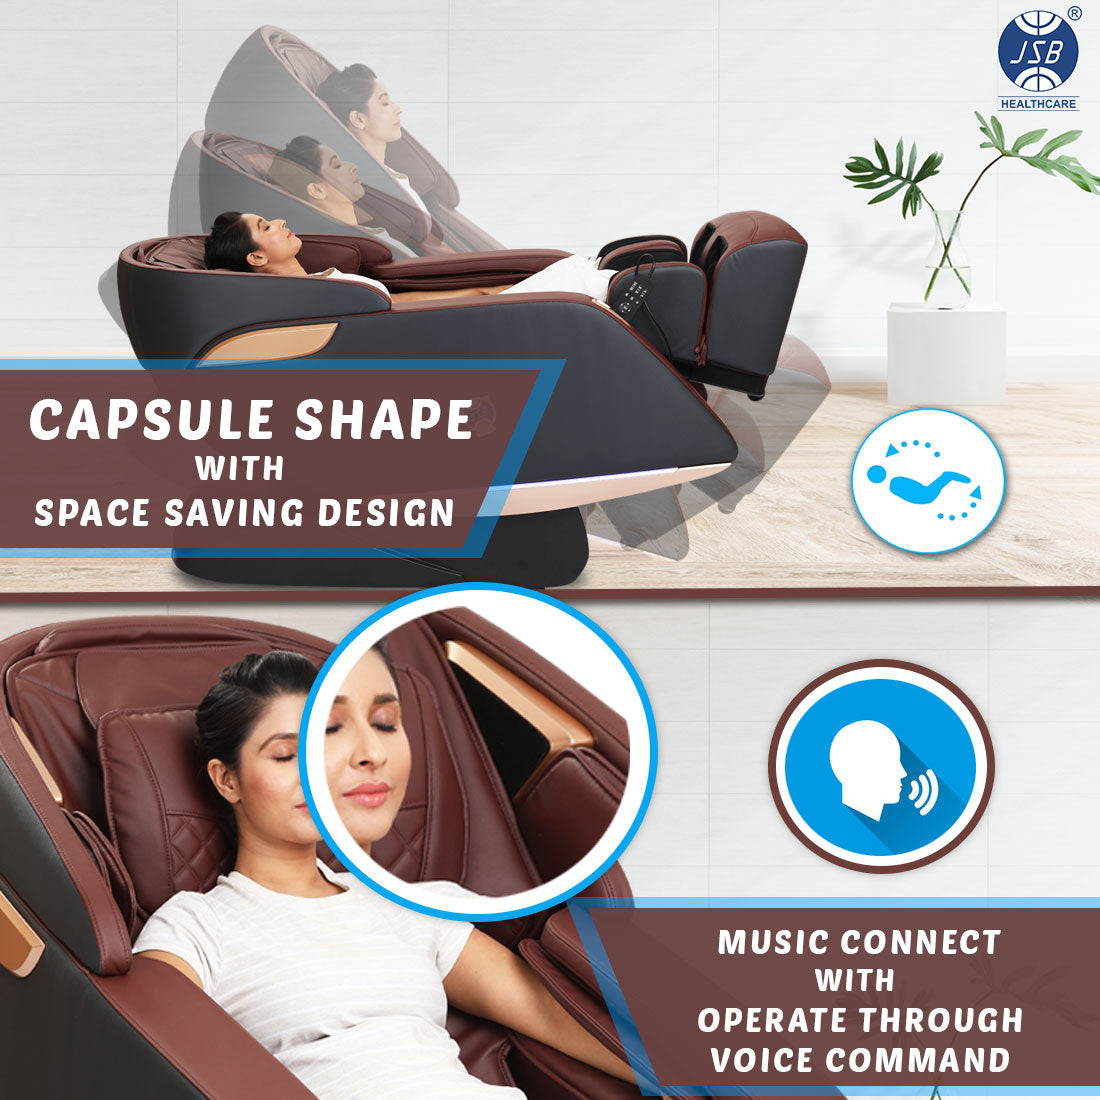 zero gravity massage chair jsb mz24 capsule shape